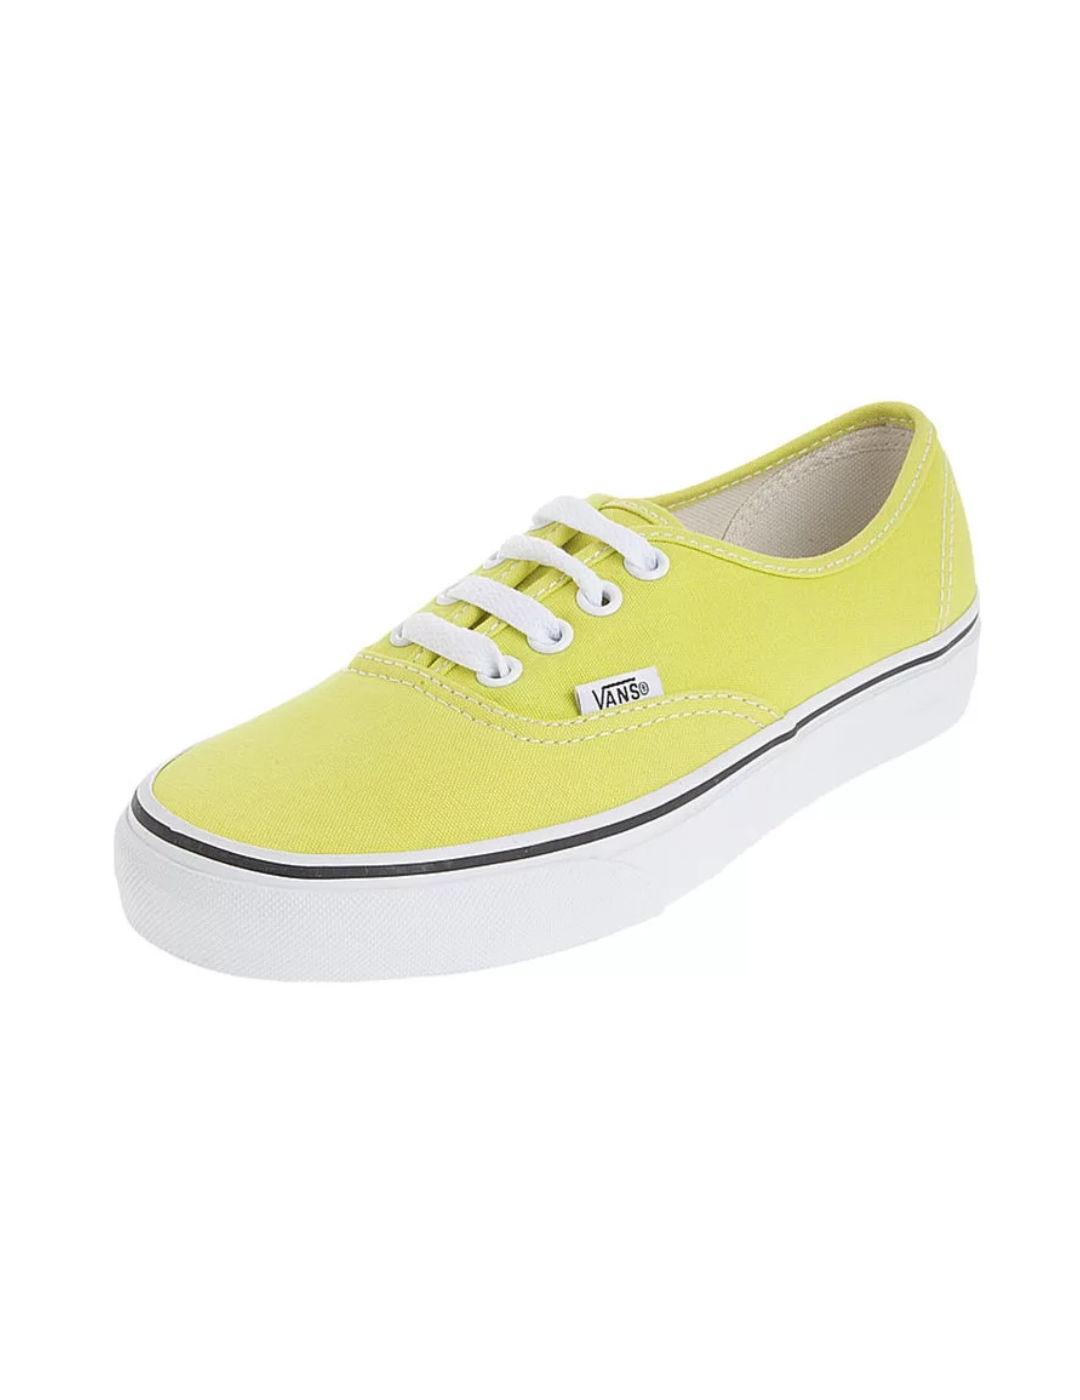 Zapatillas Vans Authentic amarillo limón unisex